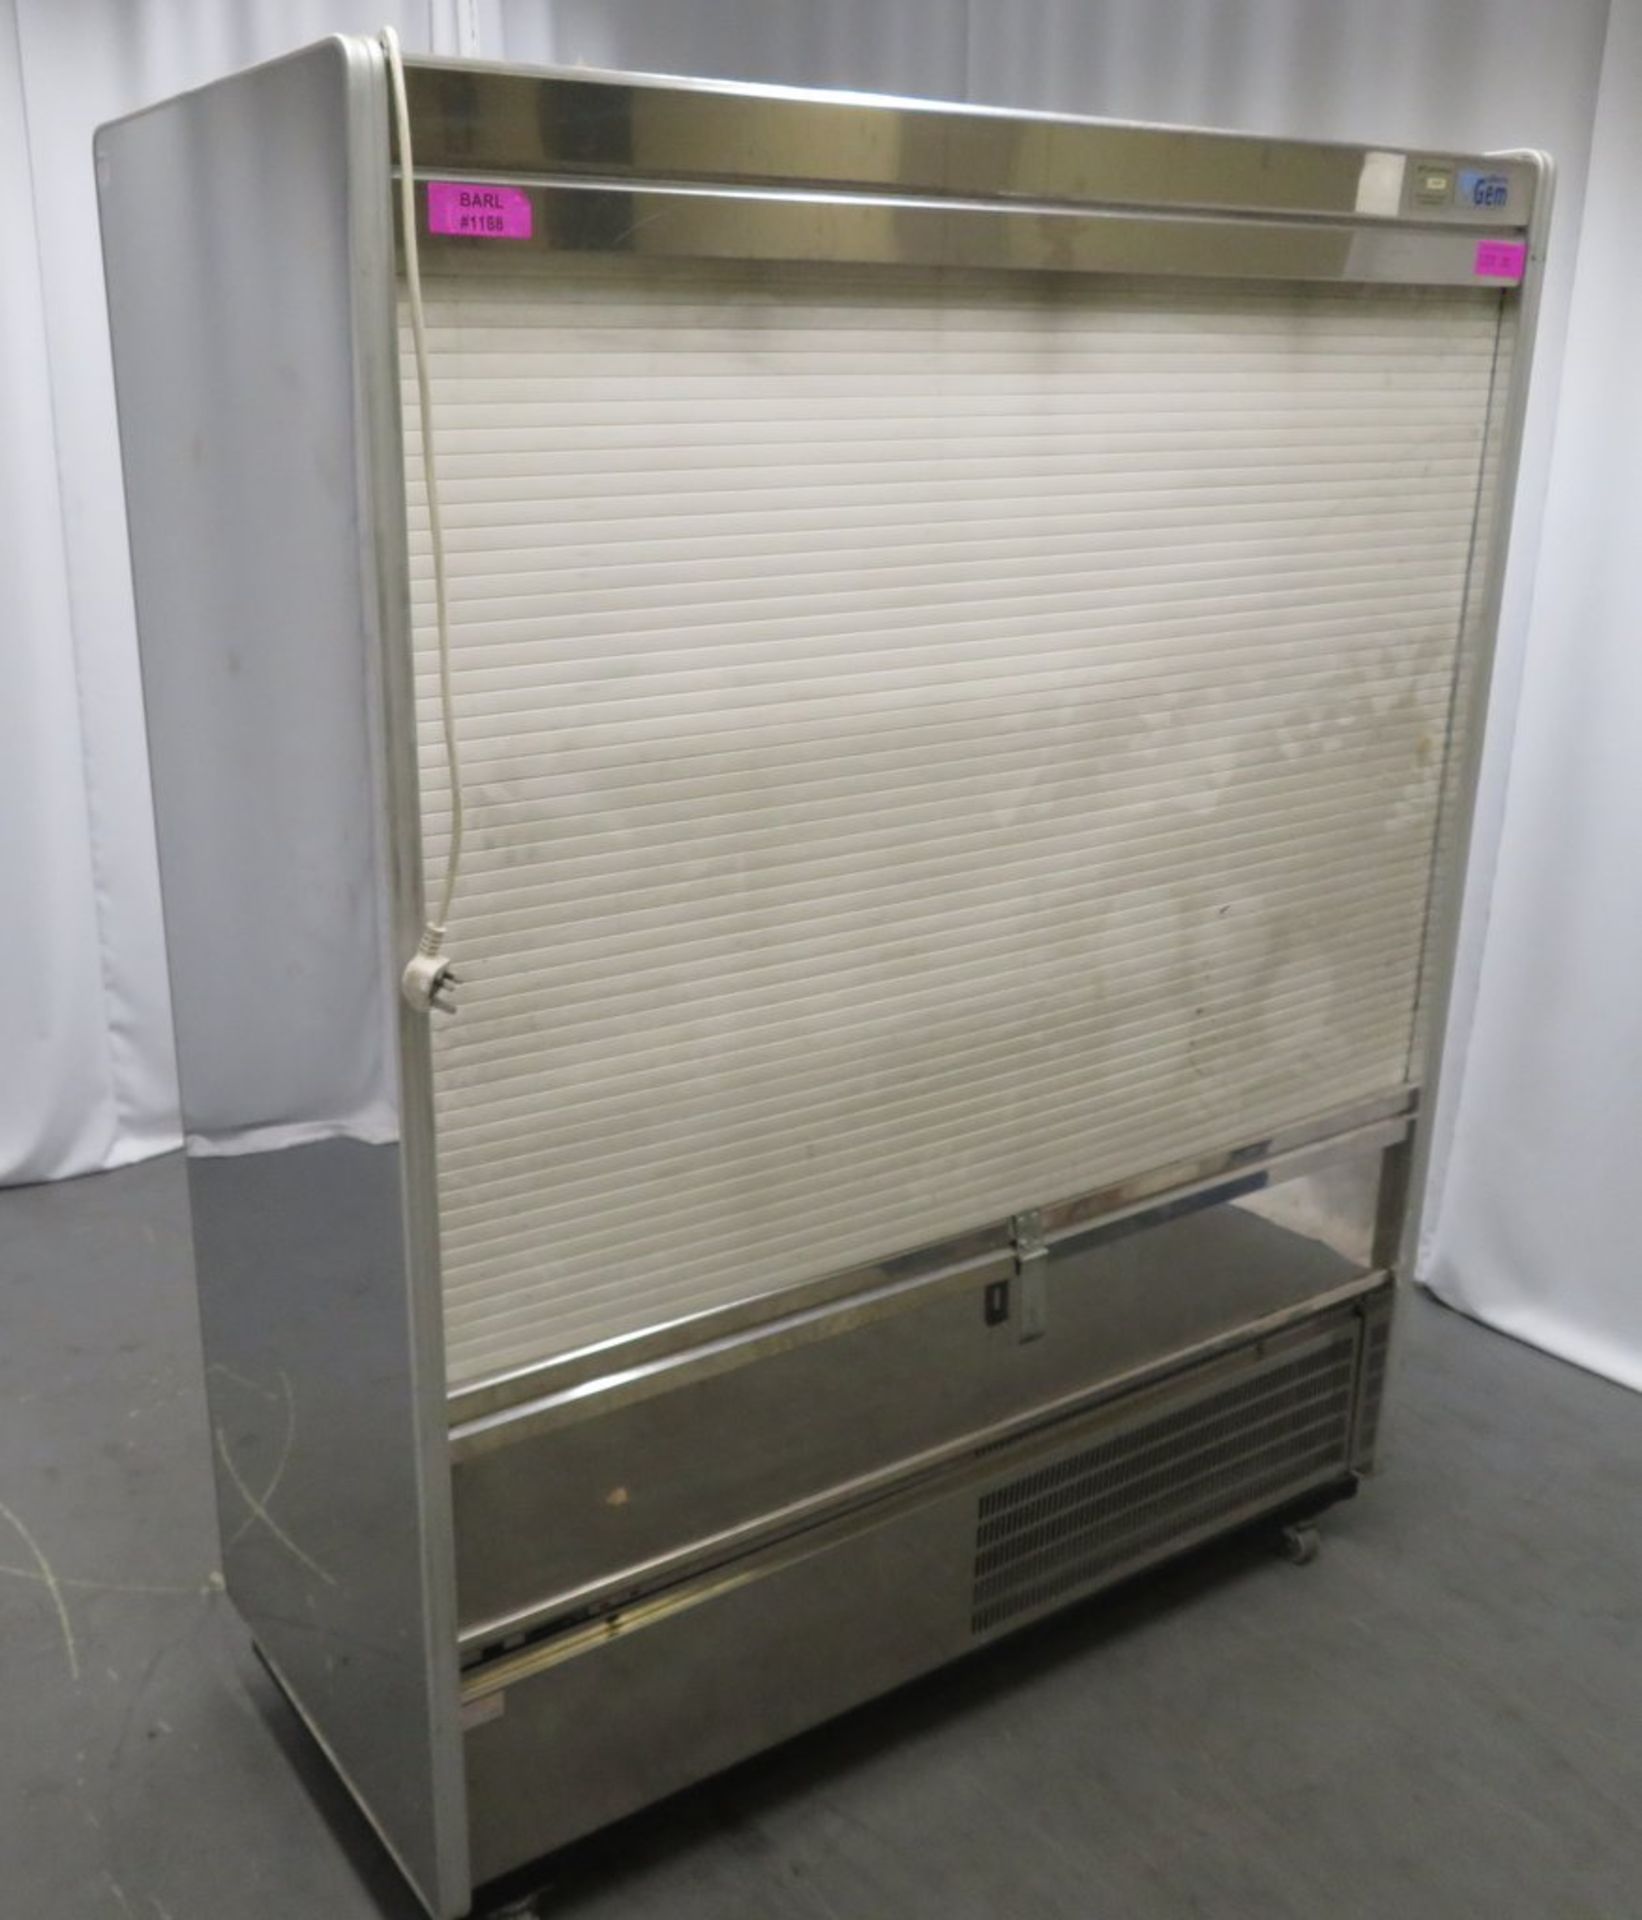 Williams Gem R150 SCS display fridge, 1 phase electric - Image 2 of 9